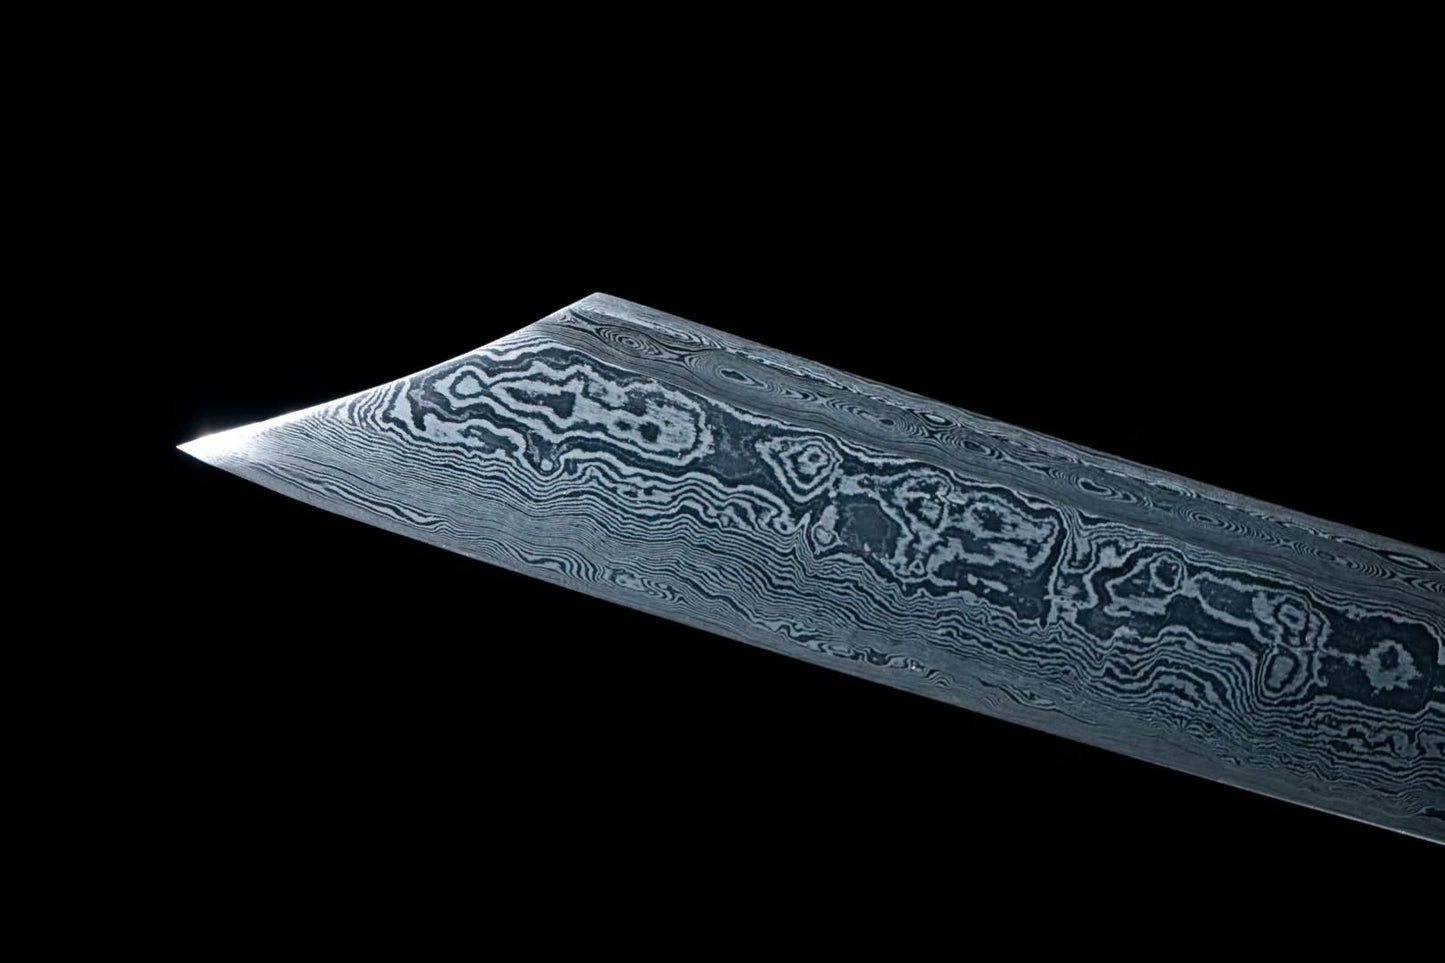 Kangxi sword,Damascus steel blade,Brass fittings,Rosewood scabbard - Chinese sword shop